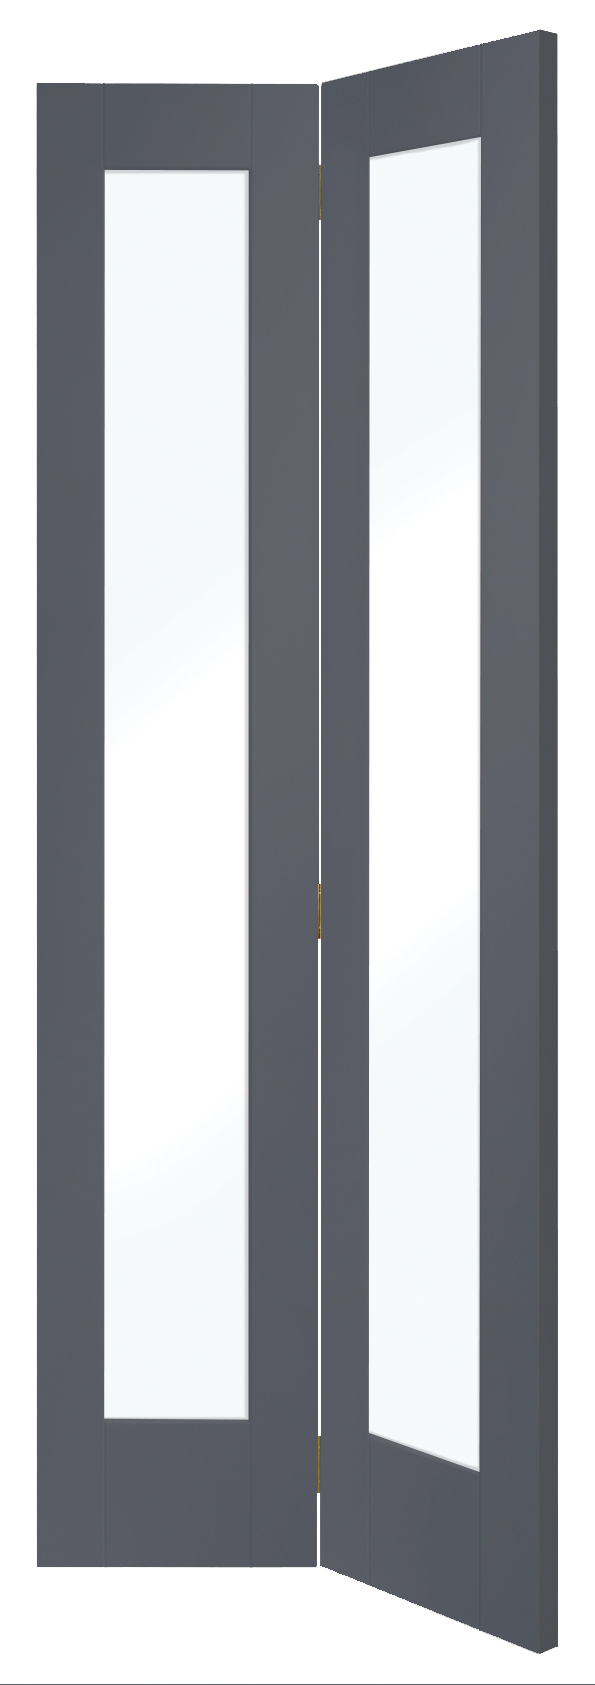 Internal White Primed Pattern 10 Bi-Fold with Clear Glass – Cinder, 1981 x 762 x 35 mm